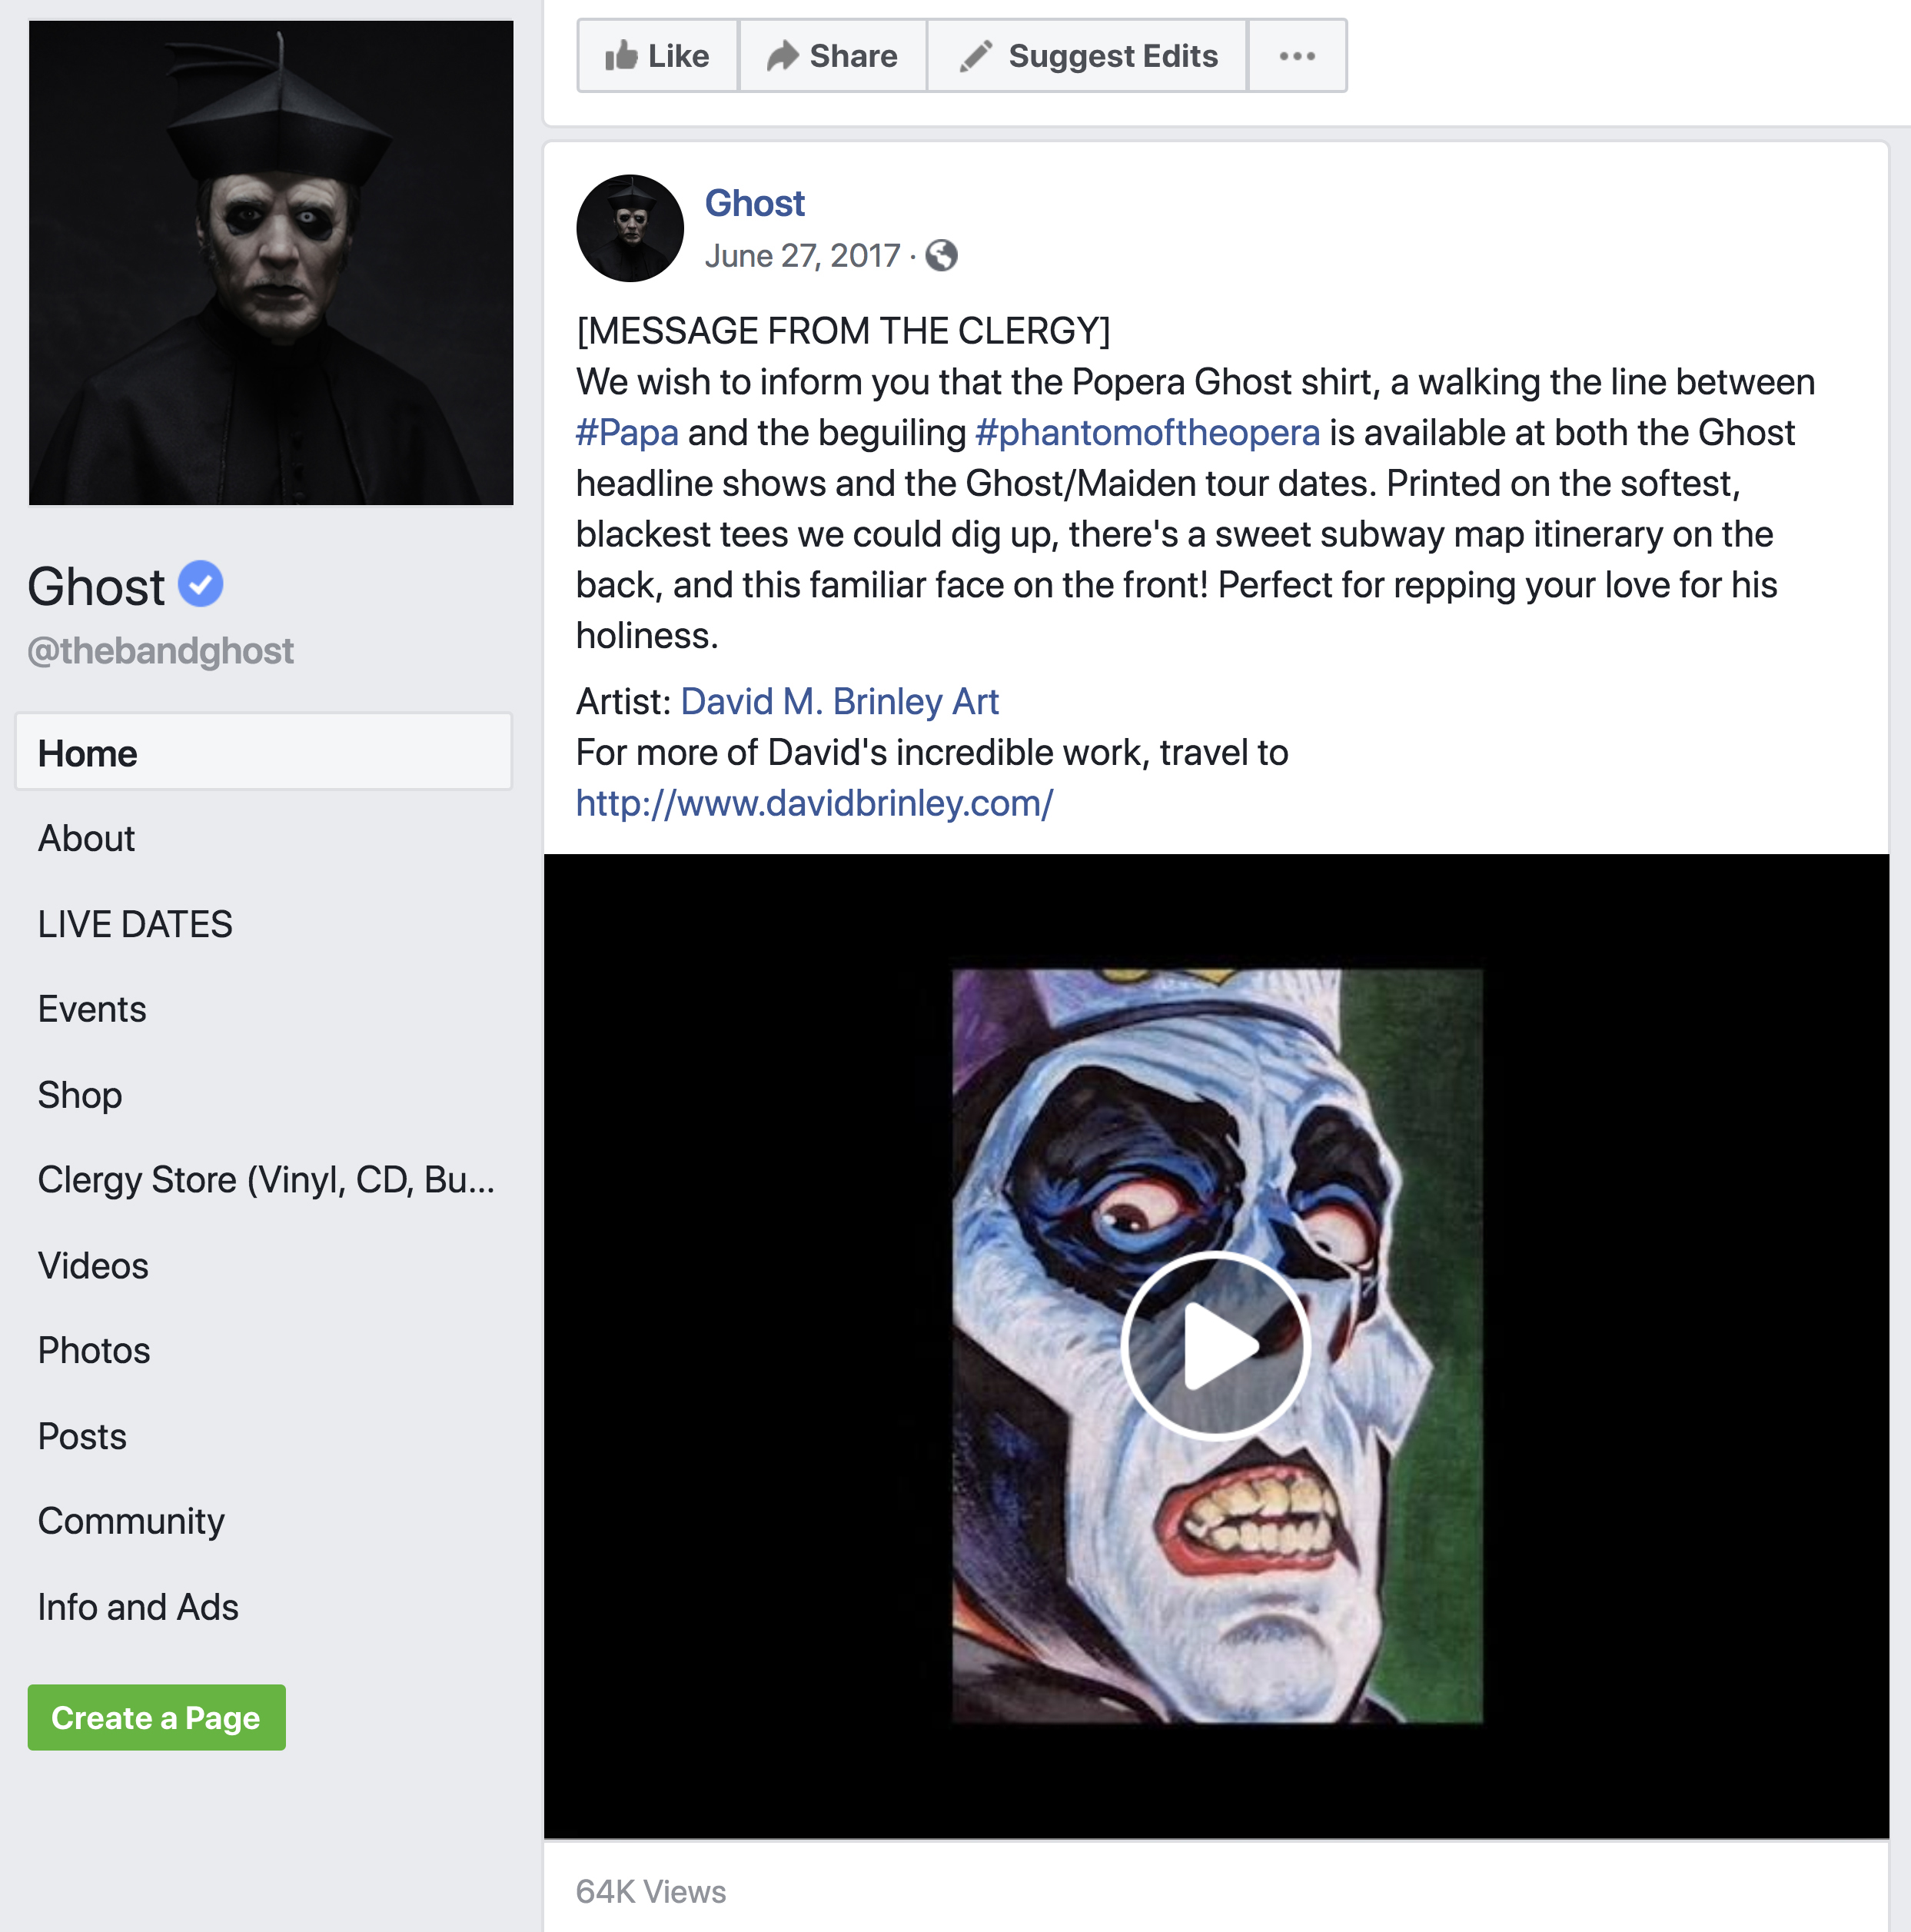   GHOST | Official Facebook post   David M. Brinley Illustration and Design 